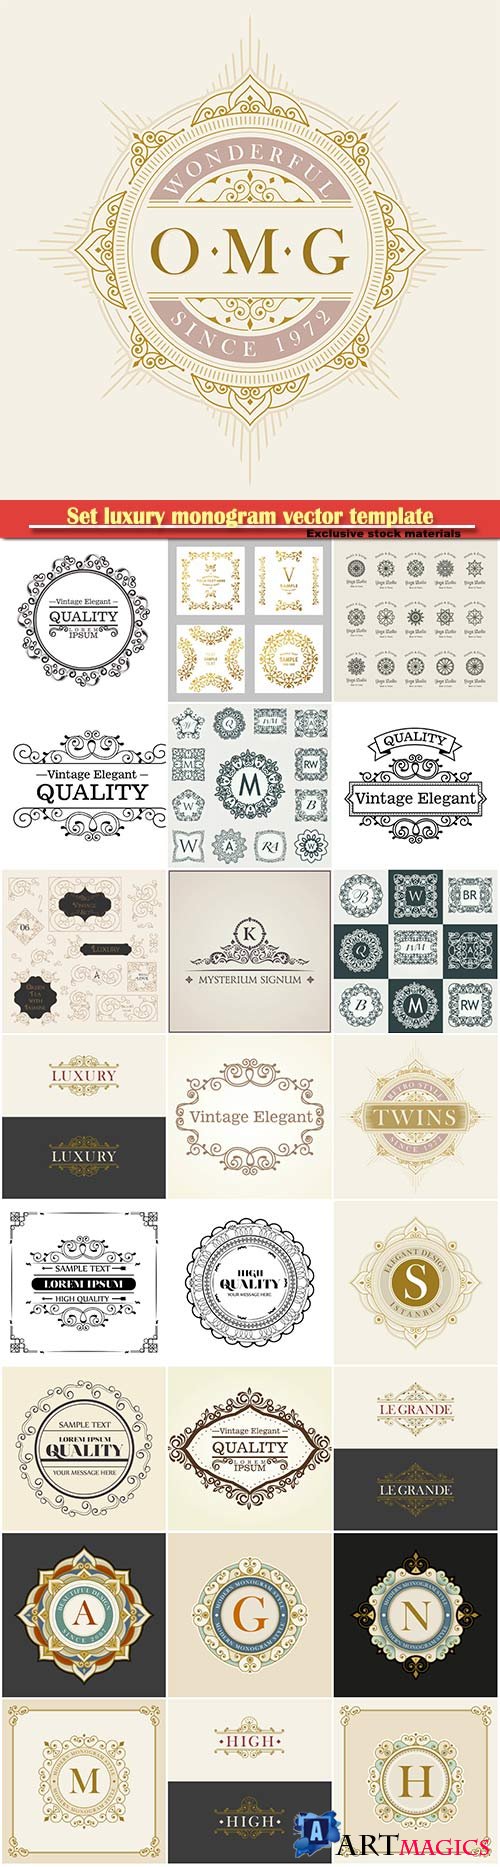 Set luxury monogram vector template, logos, badges, symbols # 4